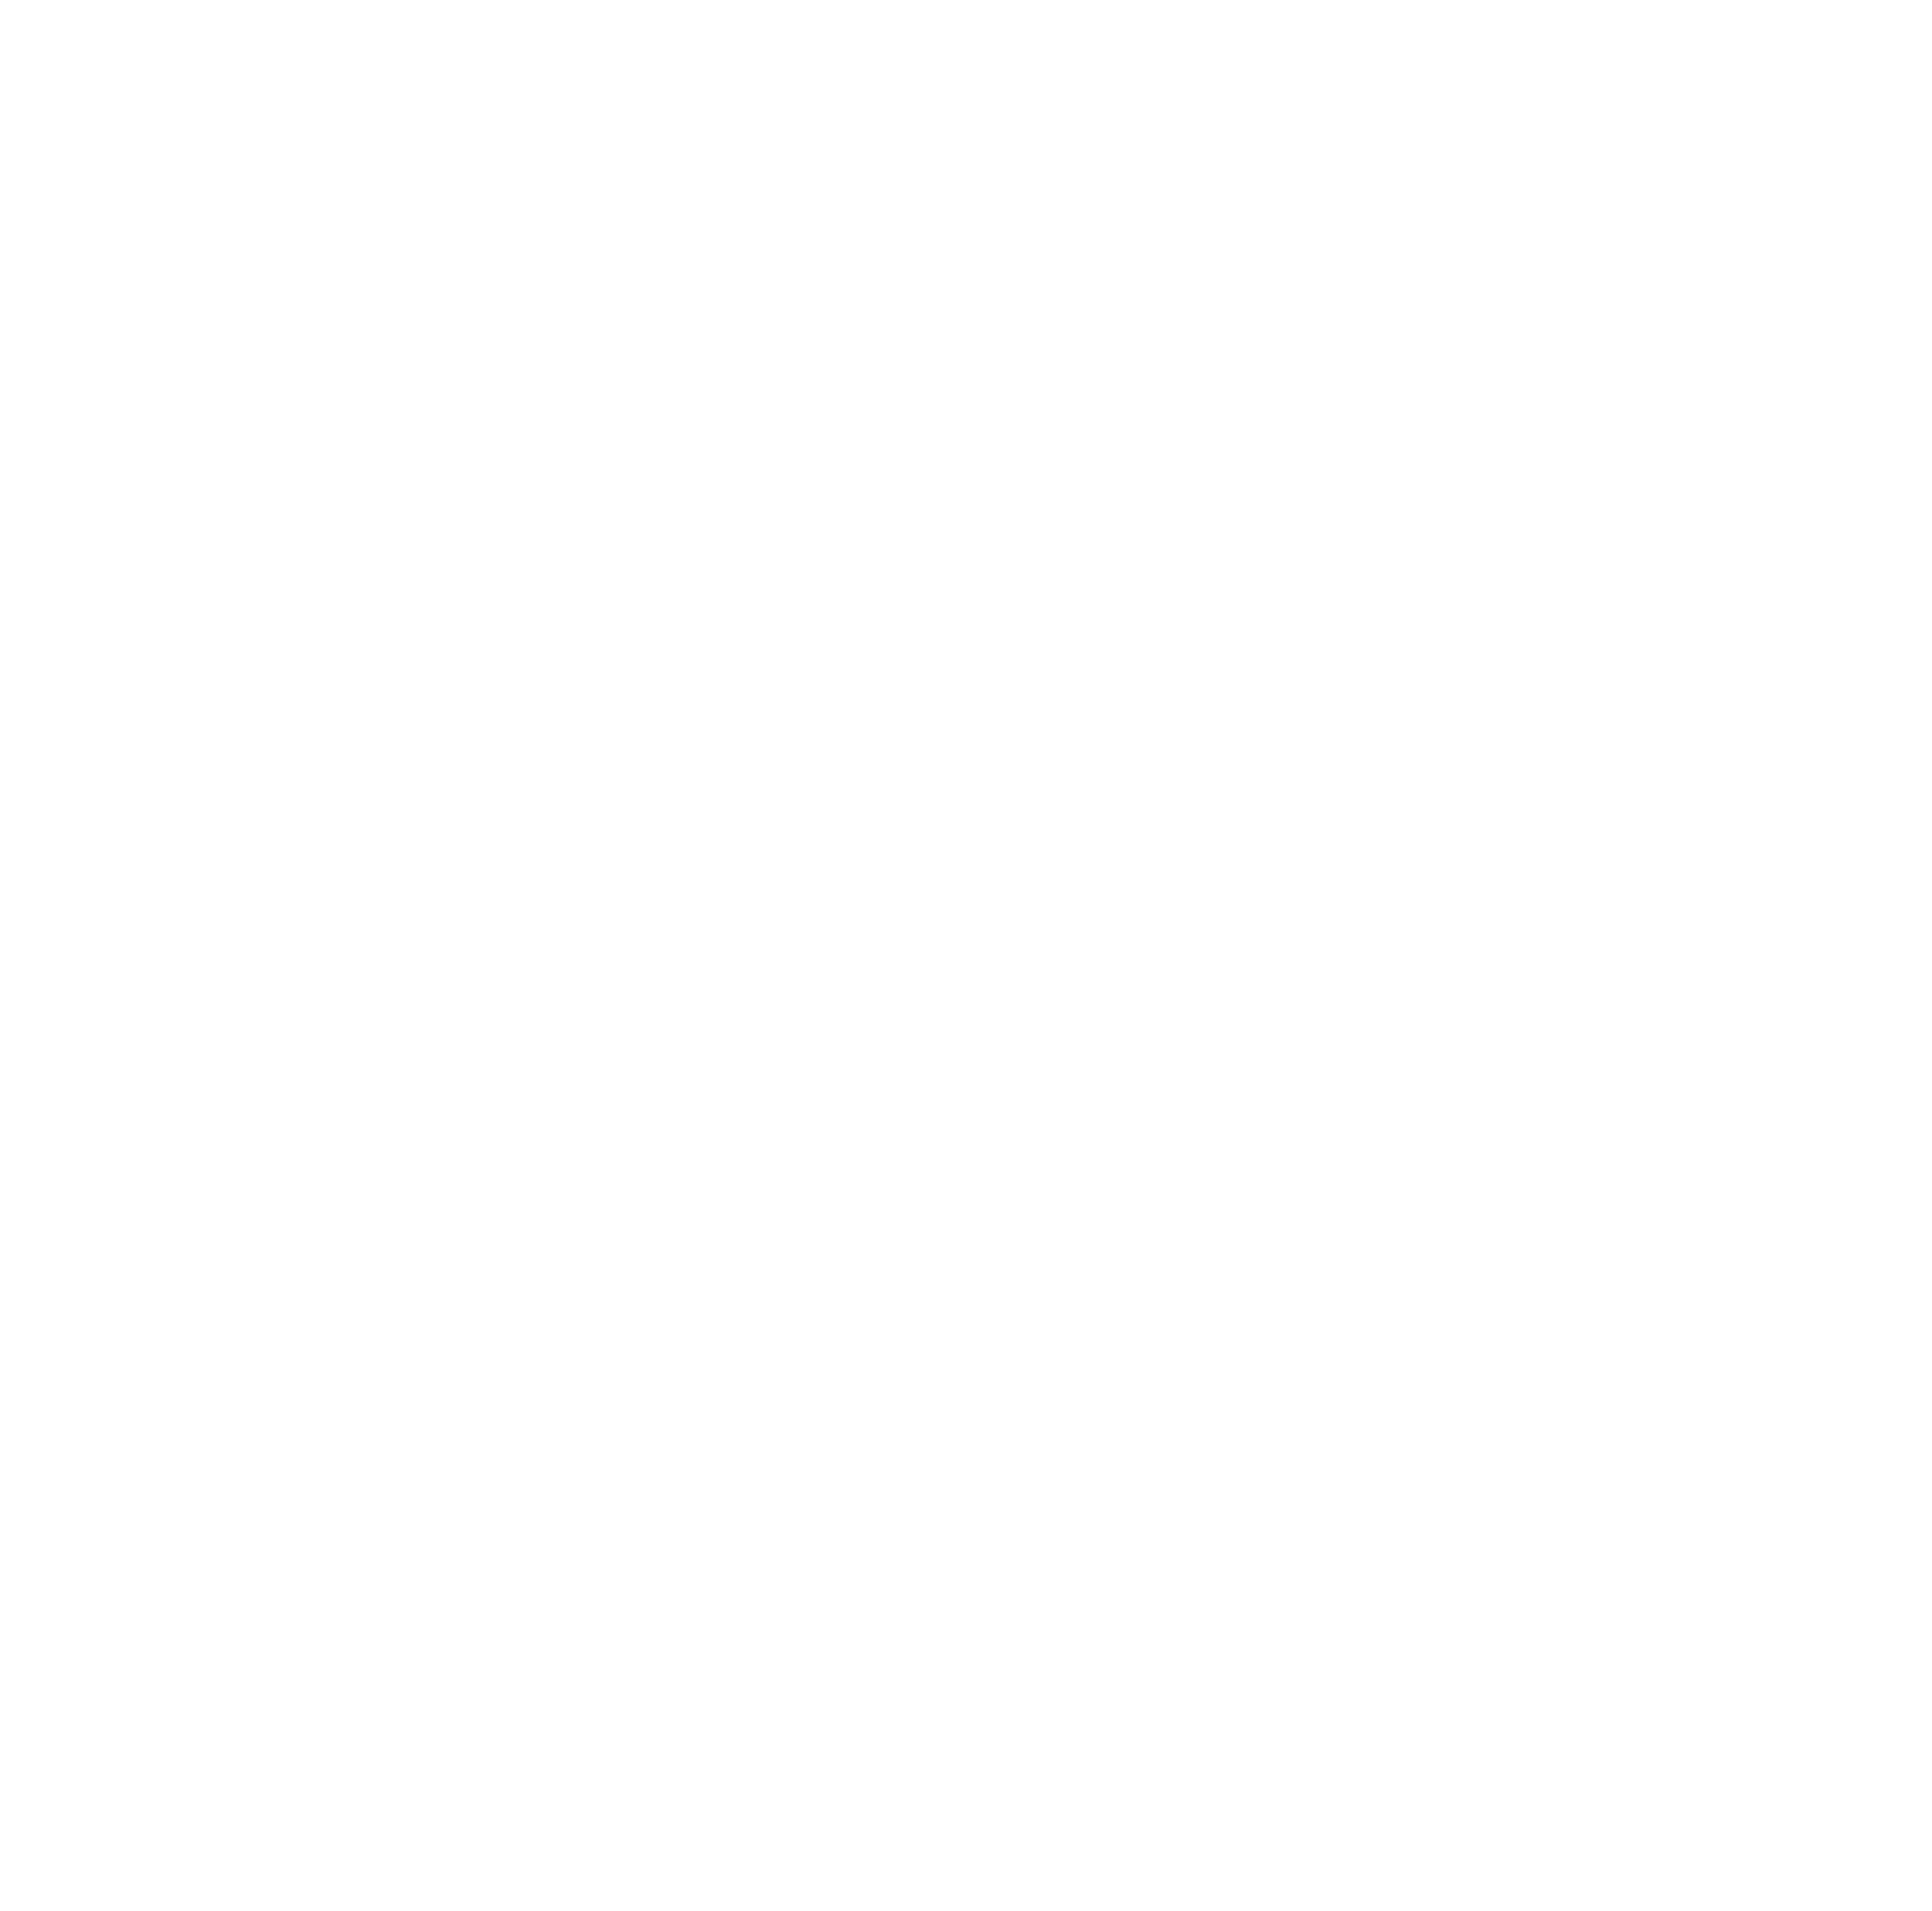 knowledge icon